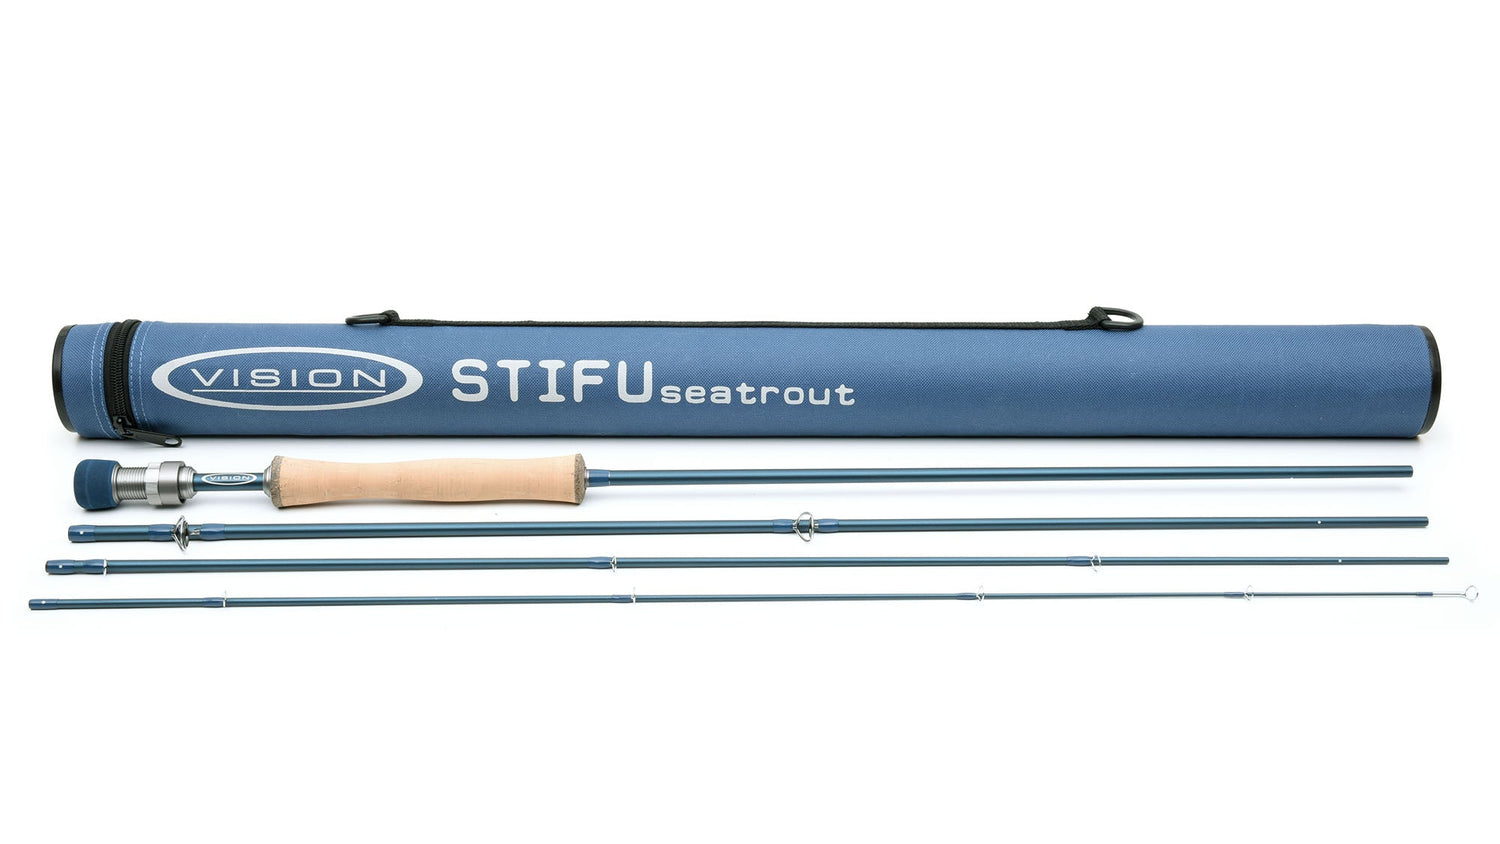 Stifu Seatrout Fly Rod